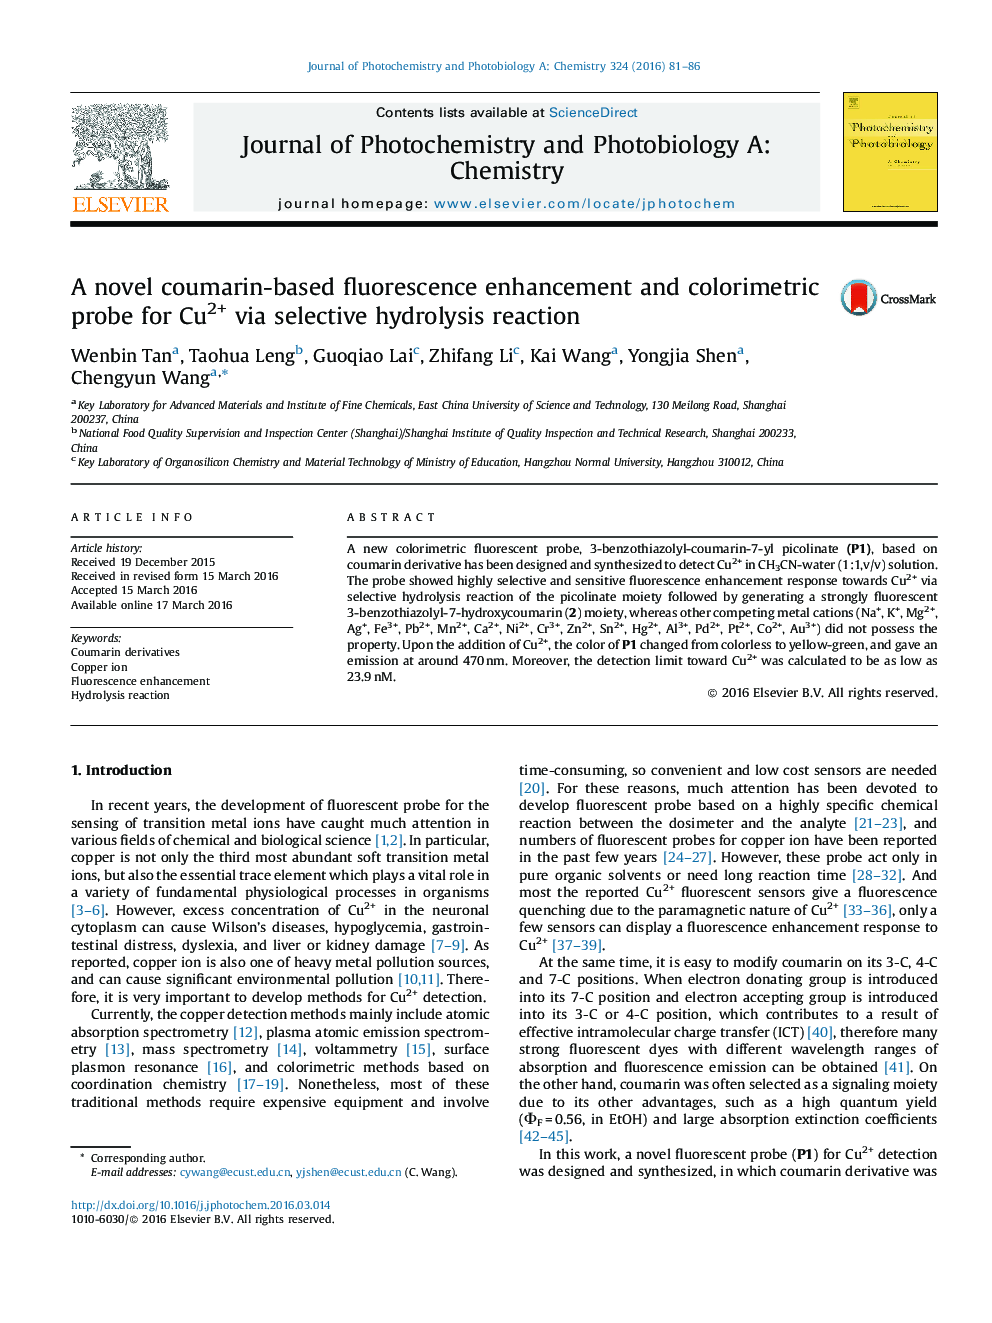 A novel coumarin-based fluorescence enhancement and colorimetric probe for Cu2+ via selective hydrolysis reaction